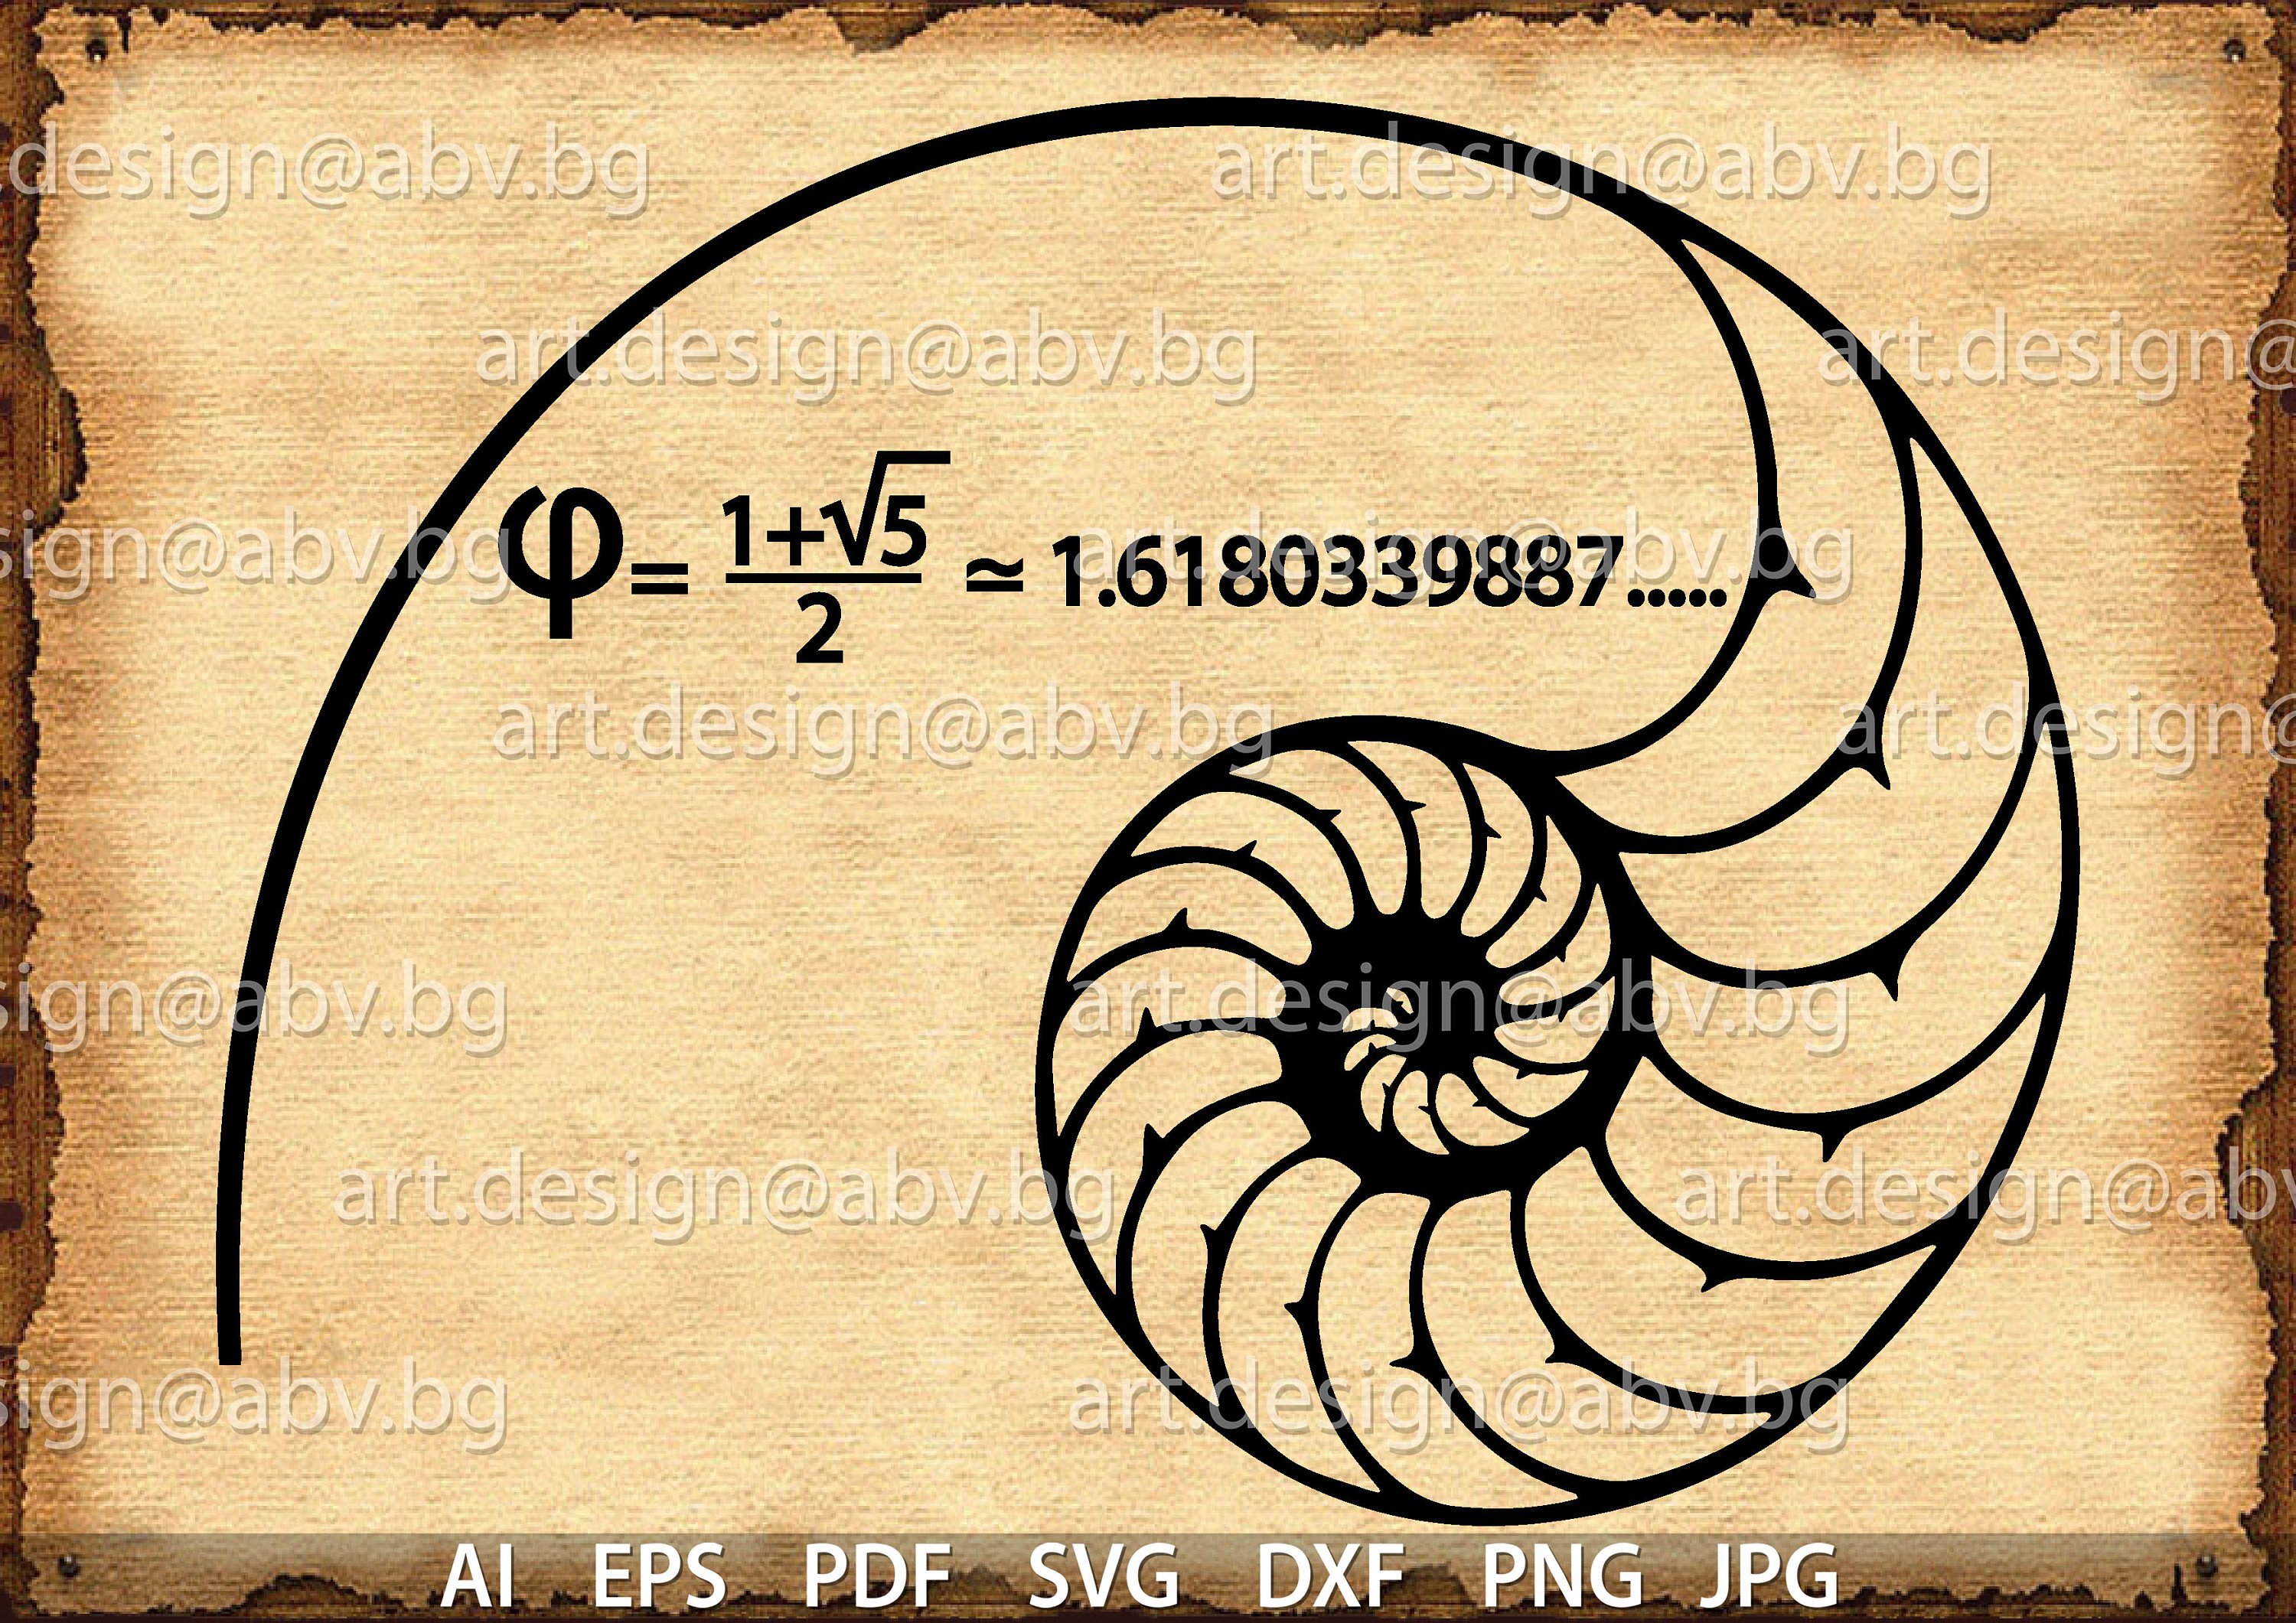 30 turn fibbonaci spiral illustrator download